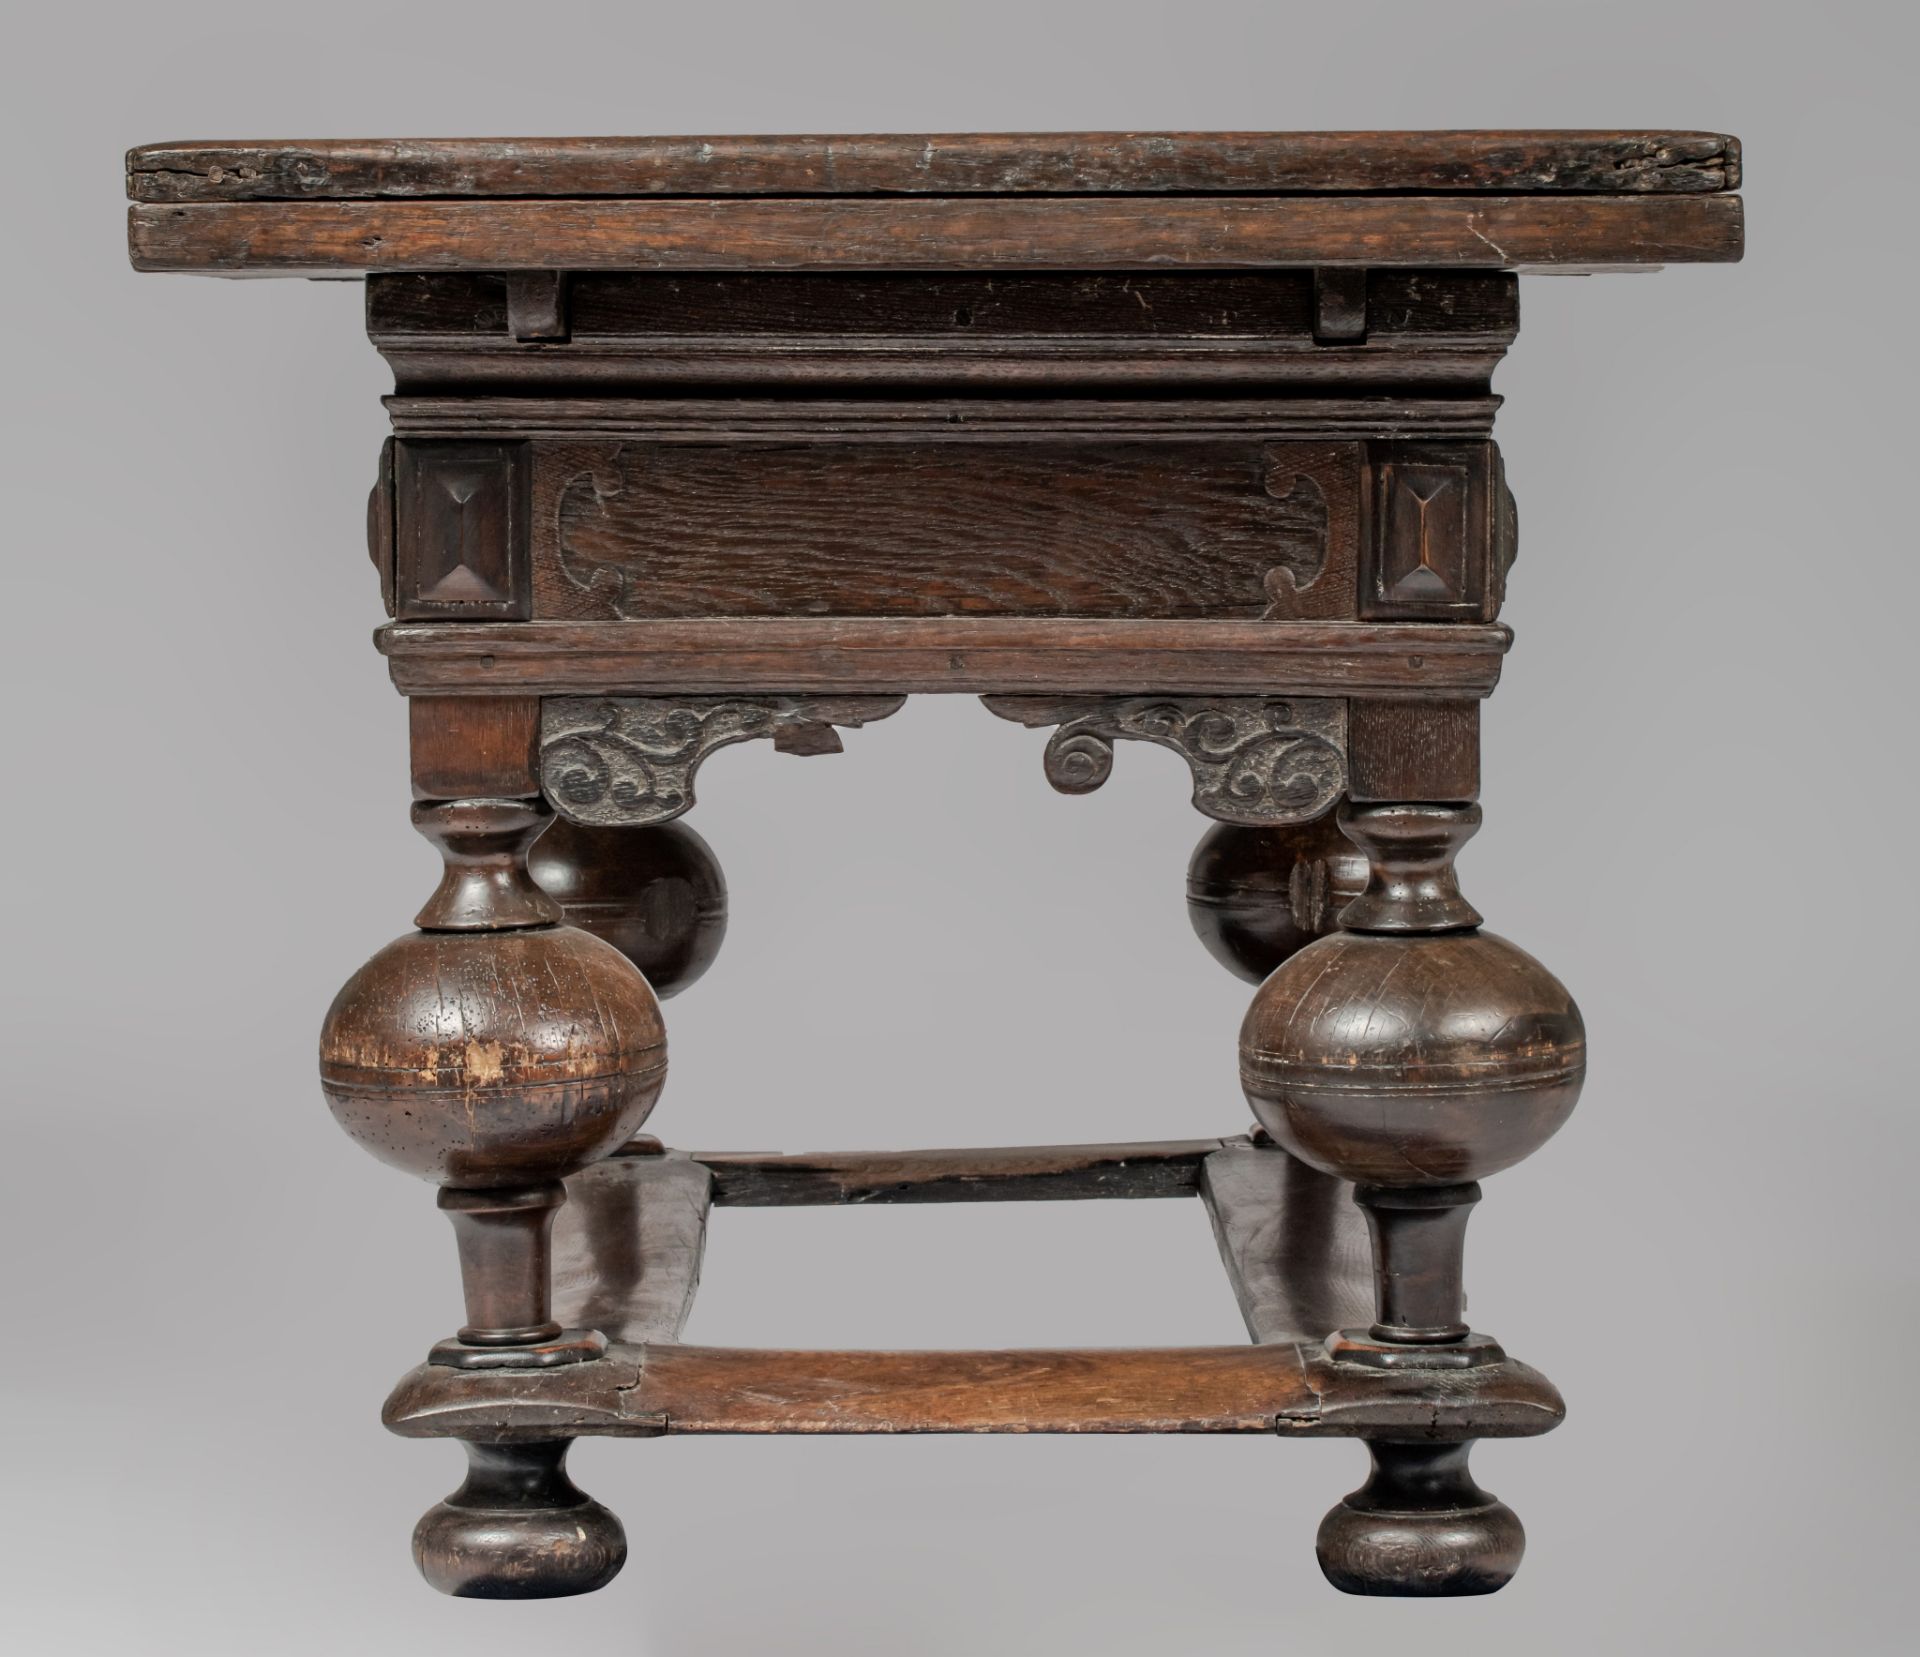 An impressive Flemish or Dutch oak table, early 17thC, H 80 - W 146 - 252 - D 85 cm - Image 3 of 8